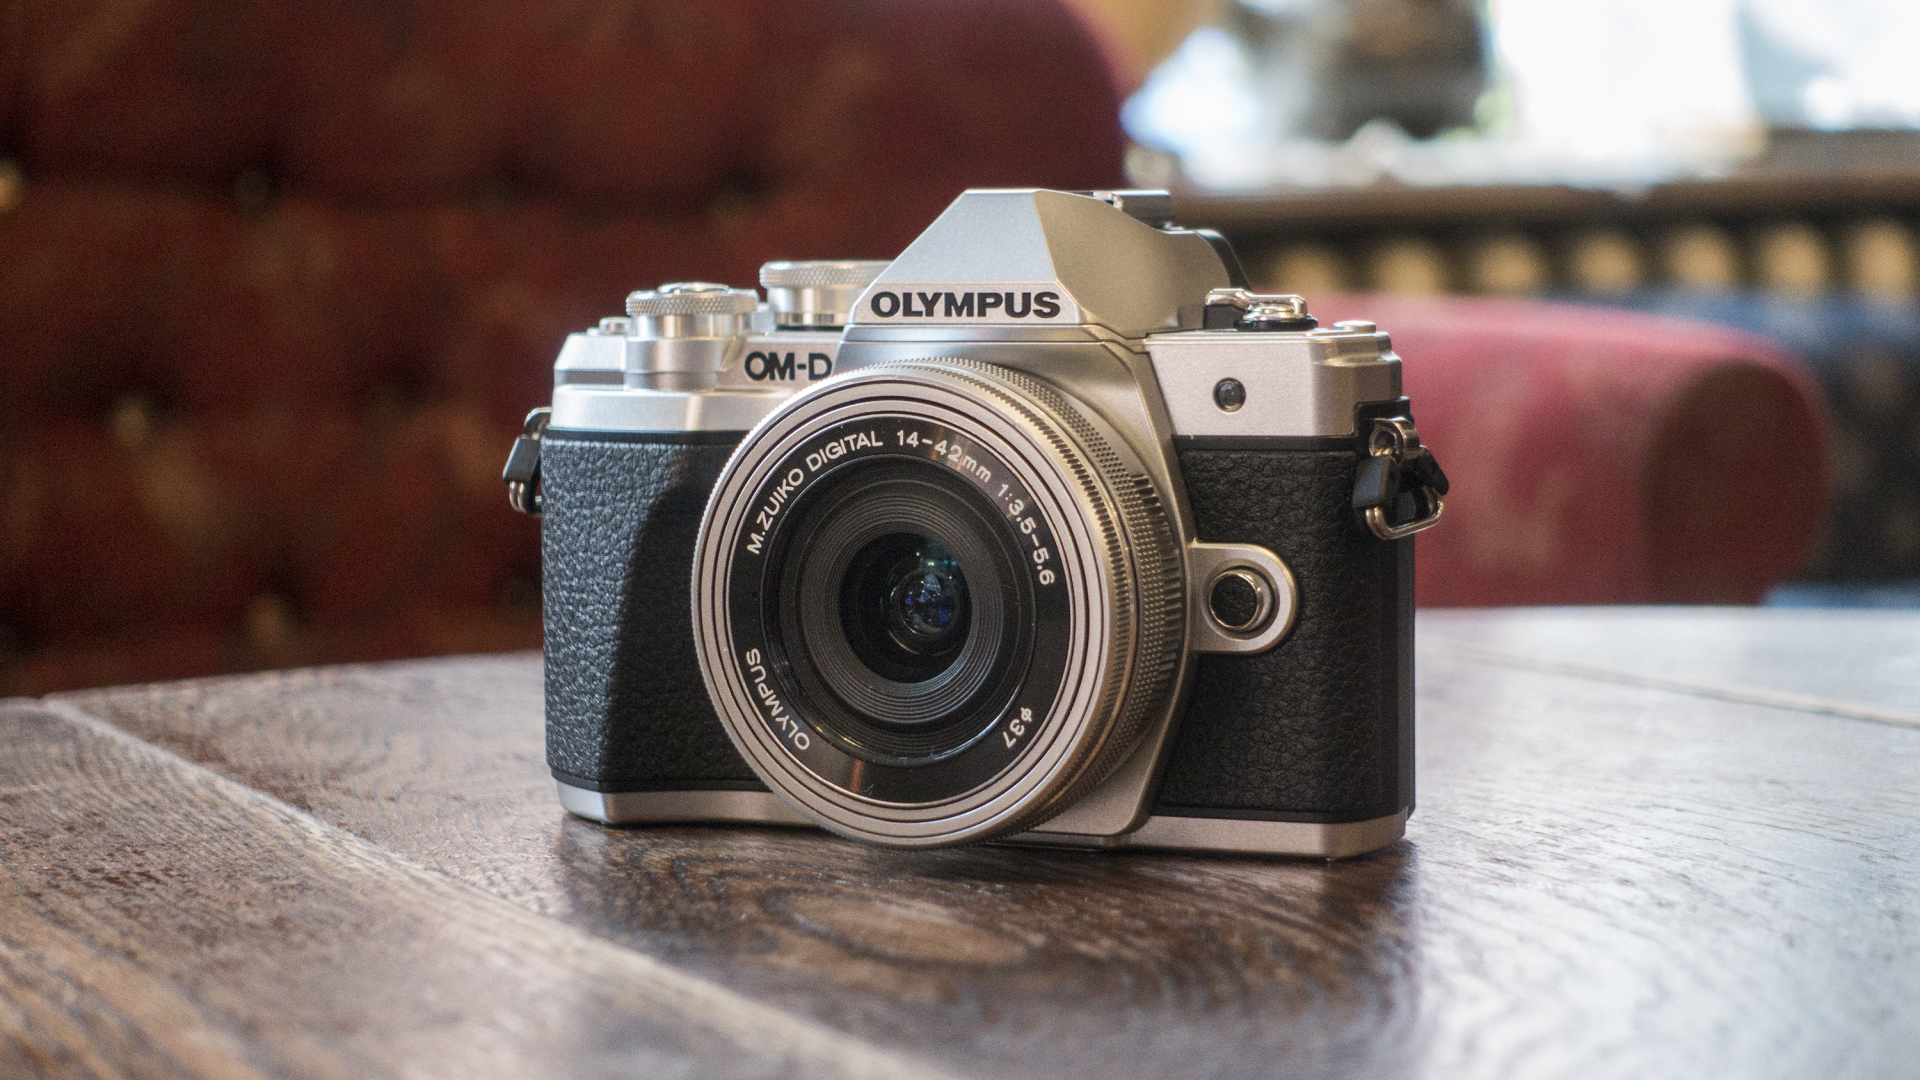 The new camera Olympus OM-D E-M10 Mark III